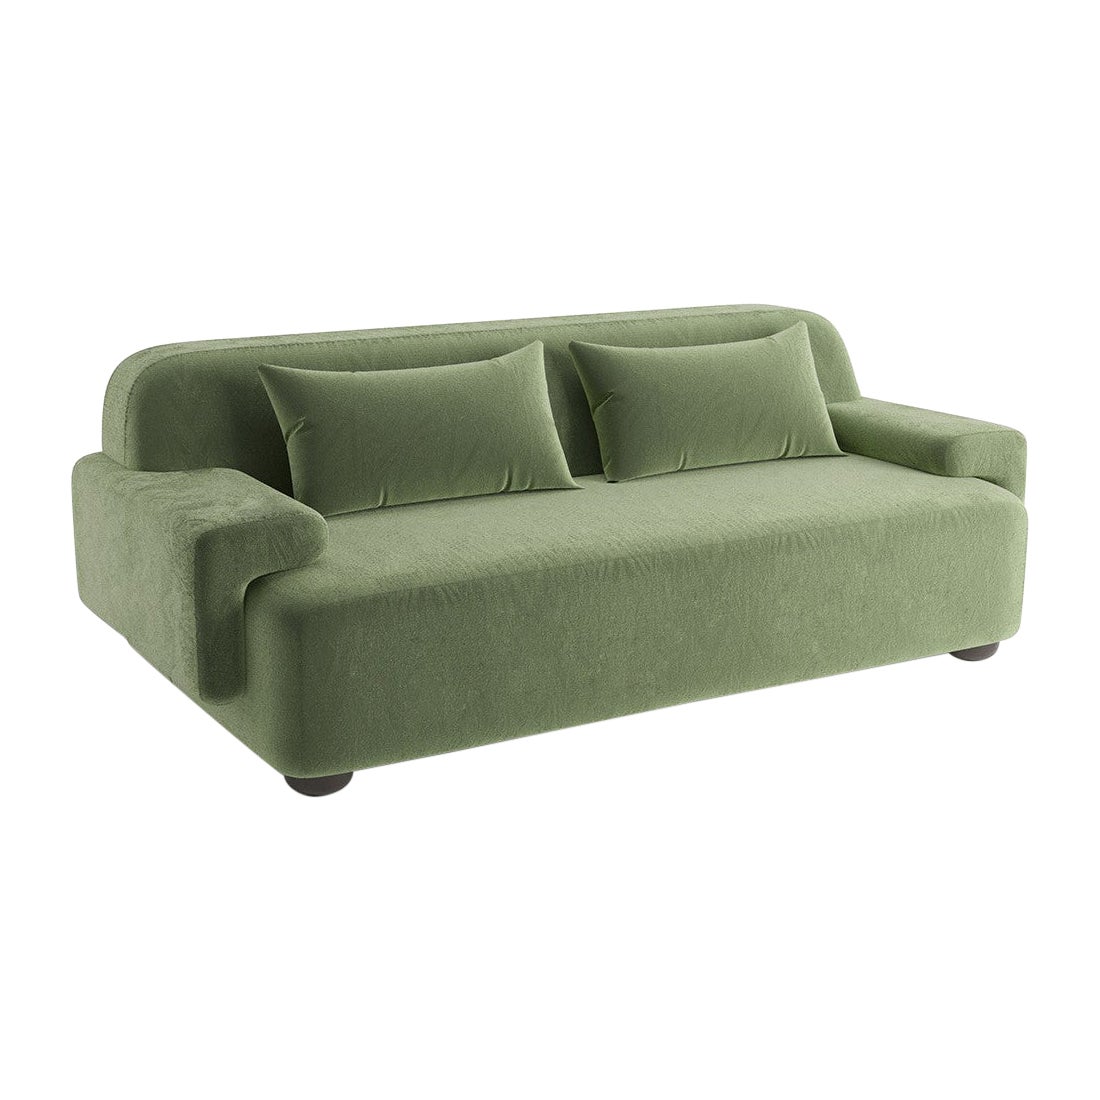 Popus Editions Lena 3-Seater Sofa in Green Verone Velvet Upholstery